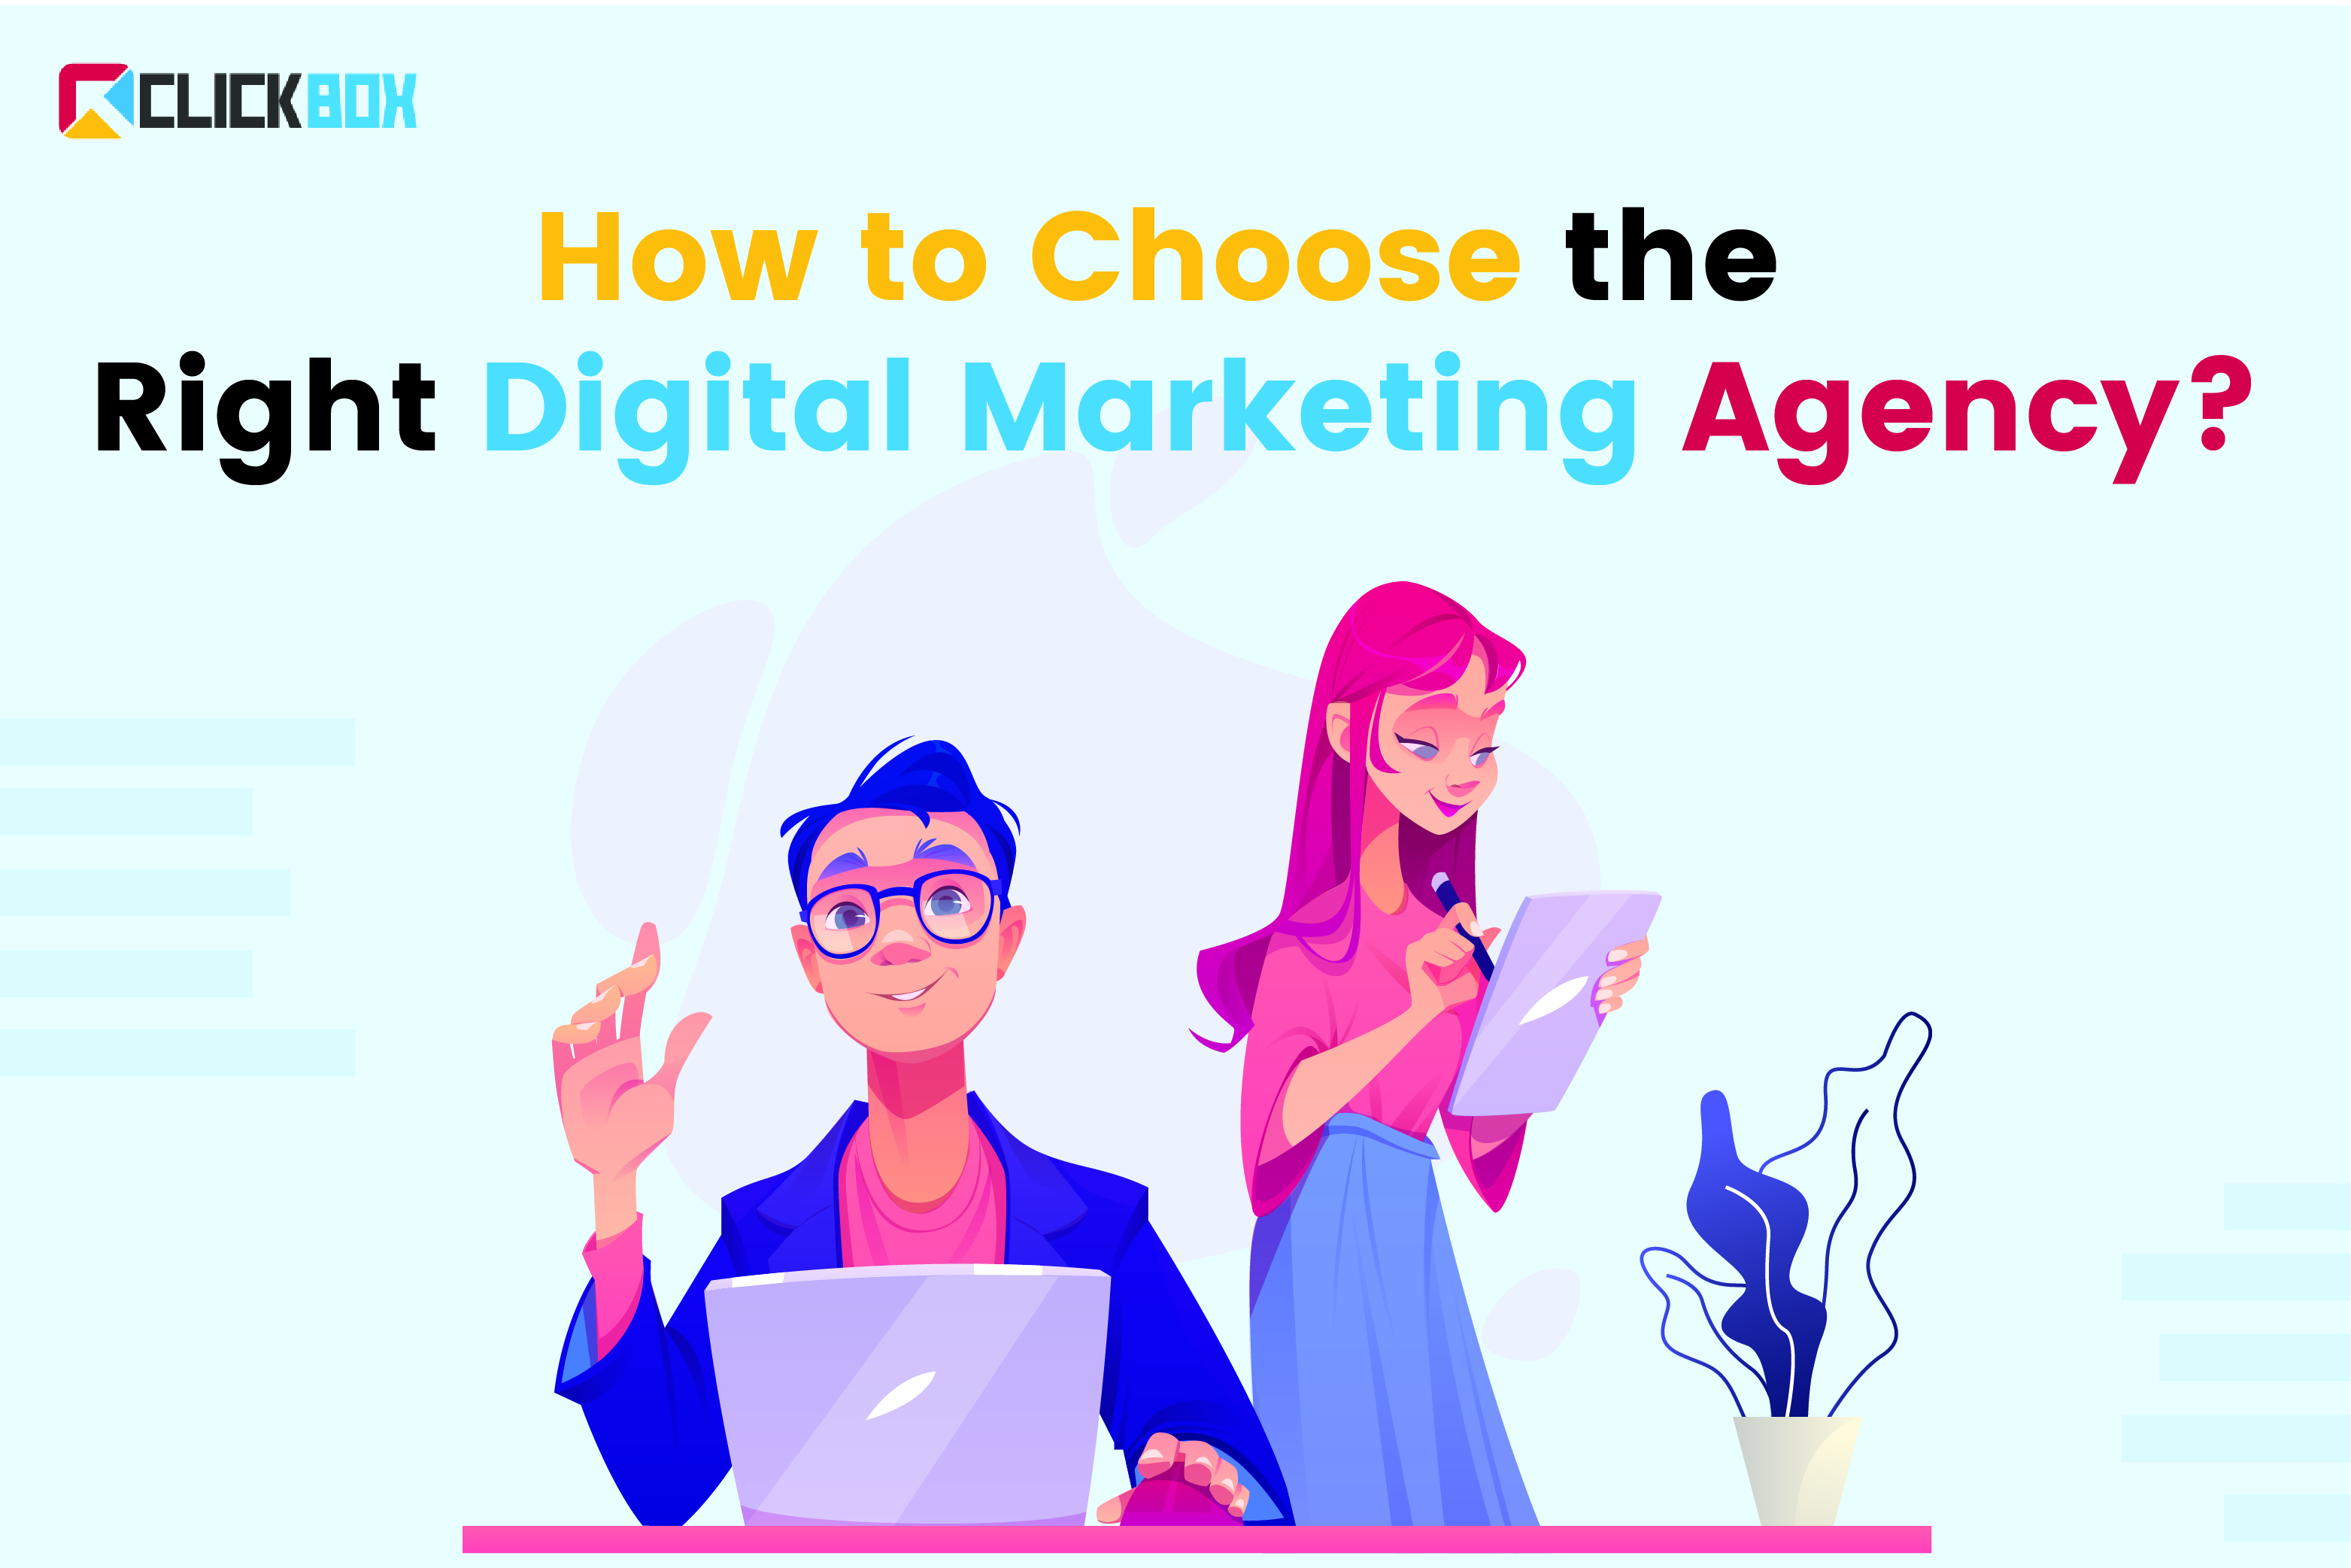 right-digital-marketing-agency-image